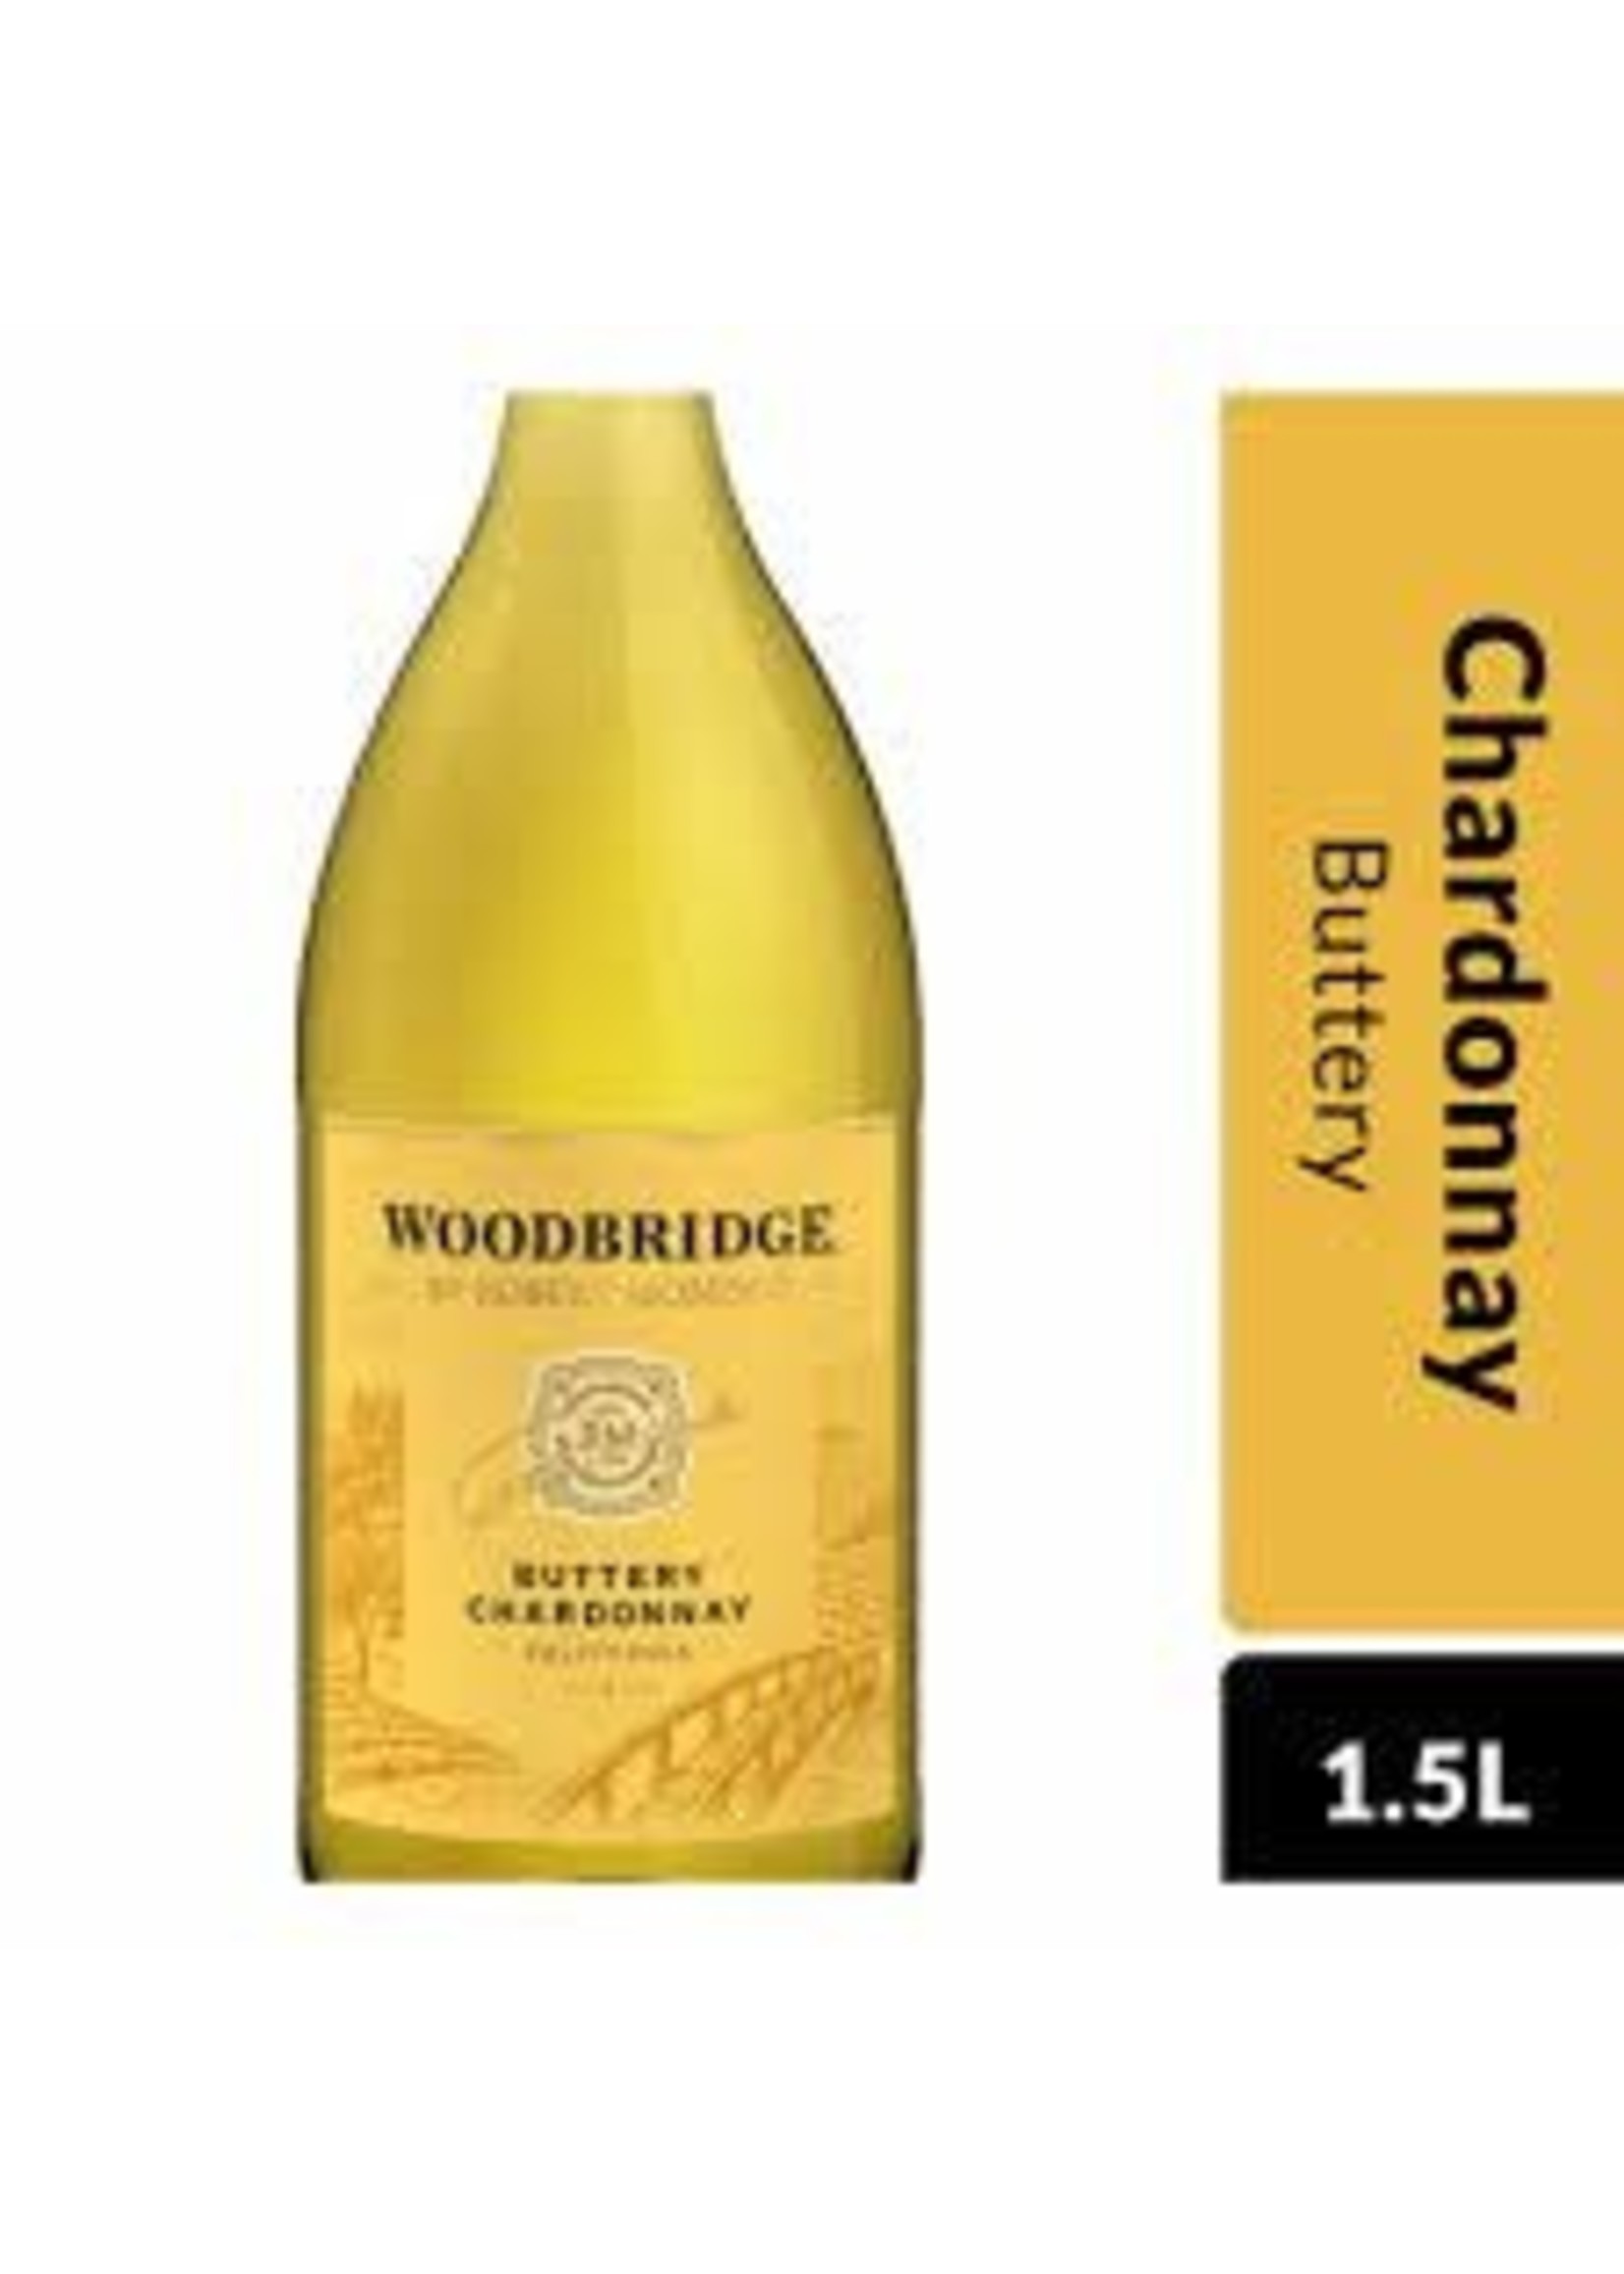 WOODBRIDGE WOODBRIDGE BUTTERY CHARDONNAY	1.5L